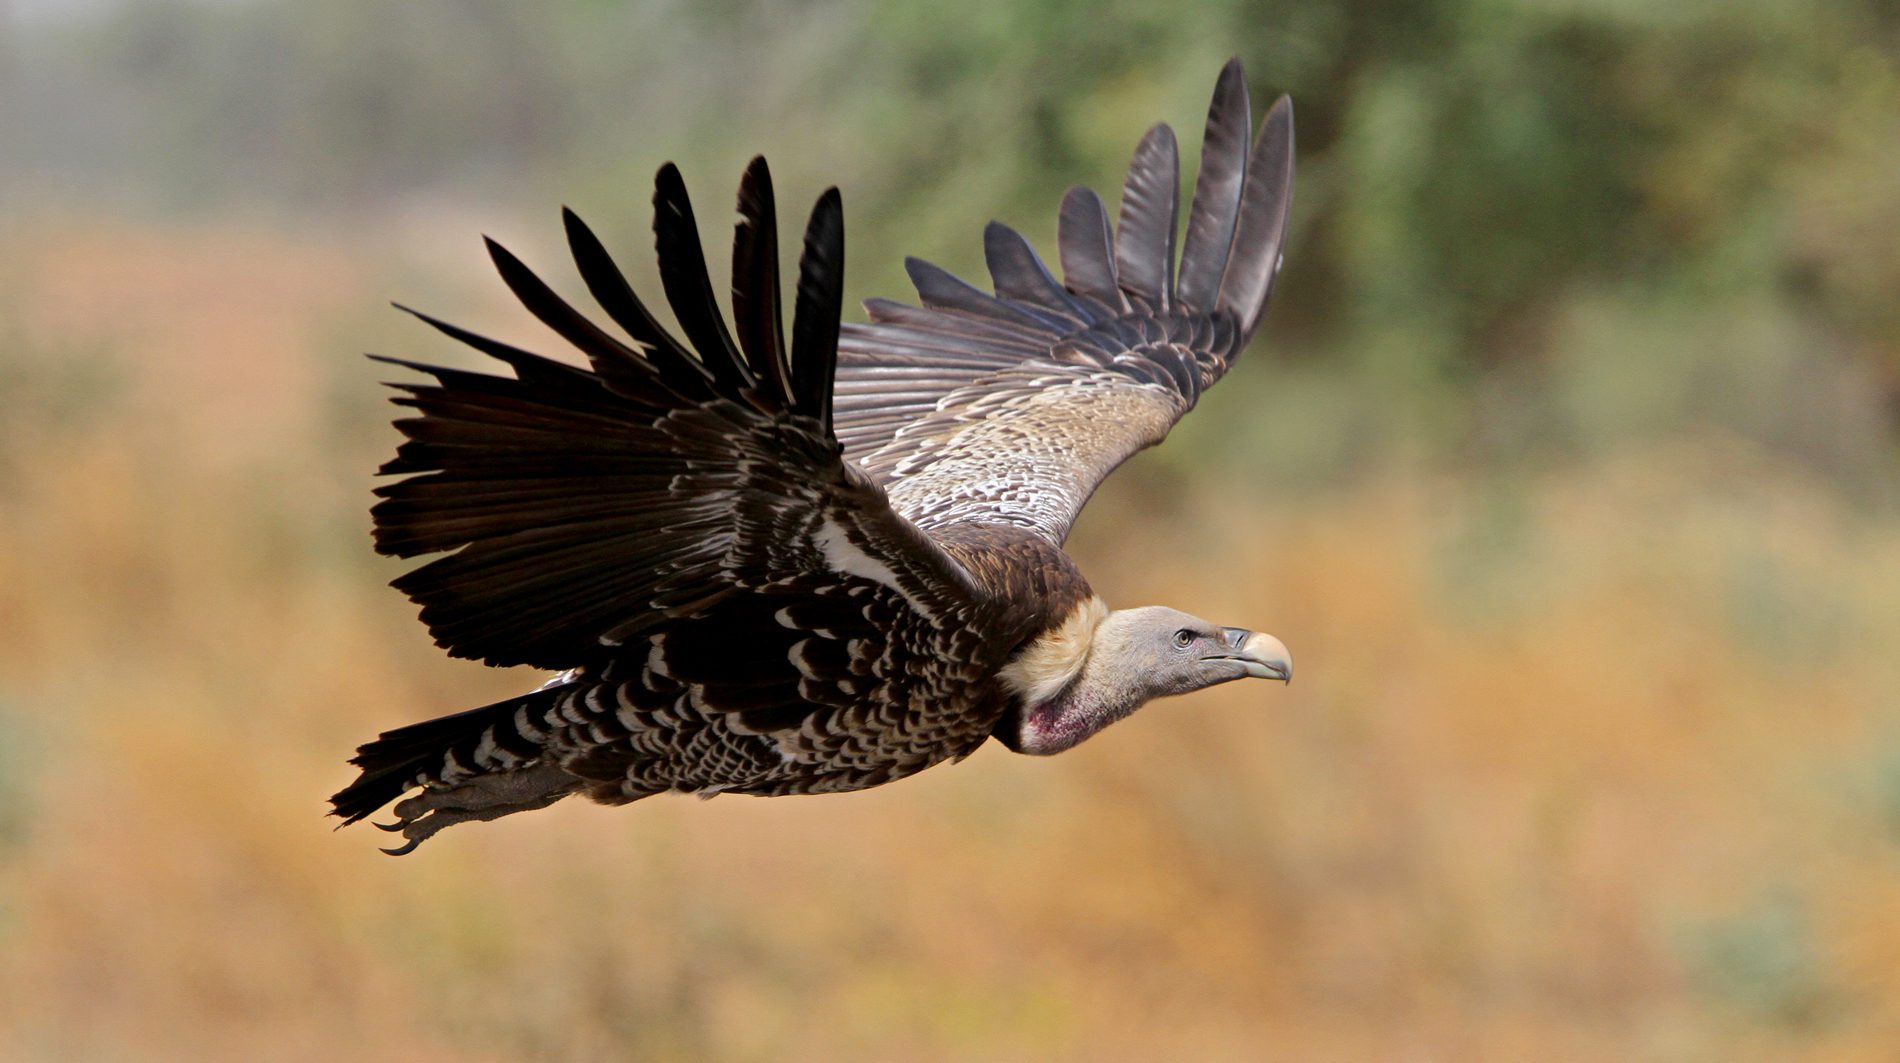 Conservation news on Vultures